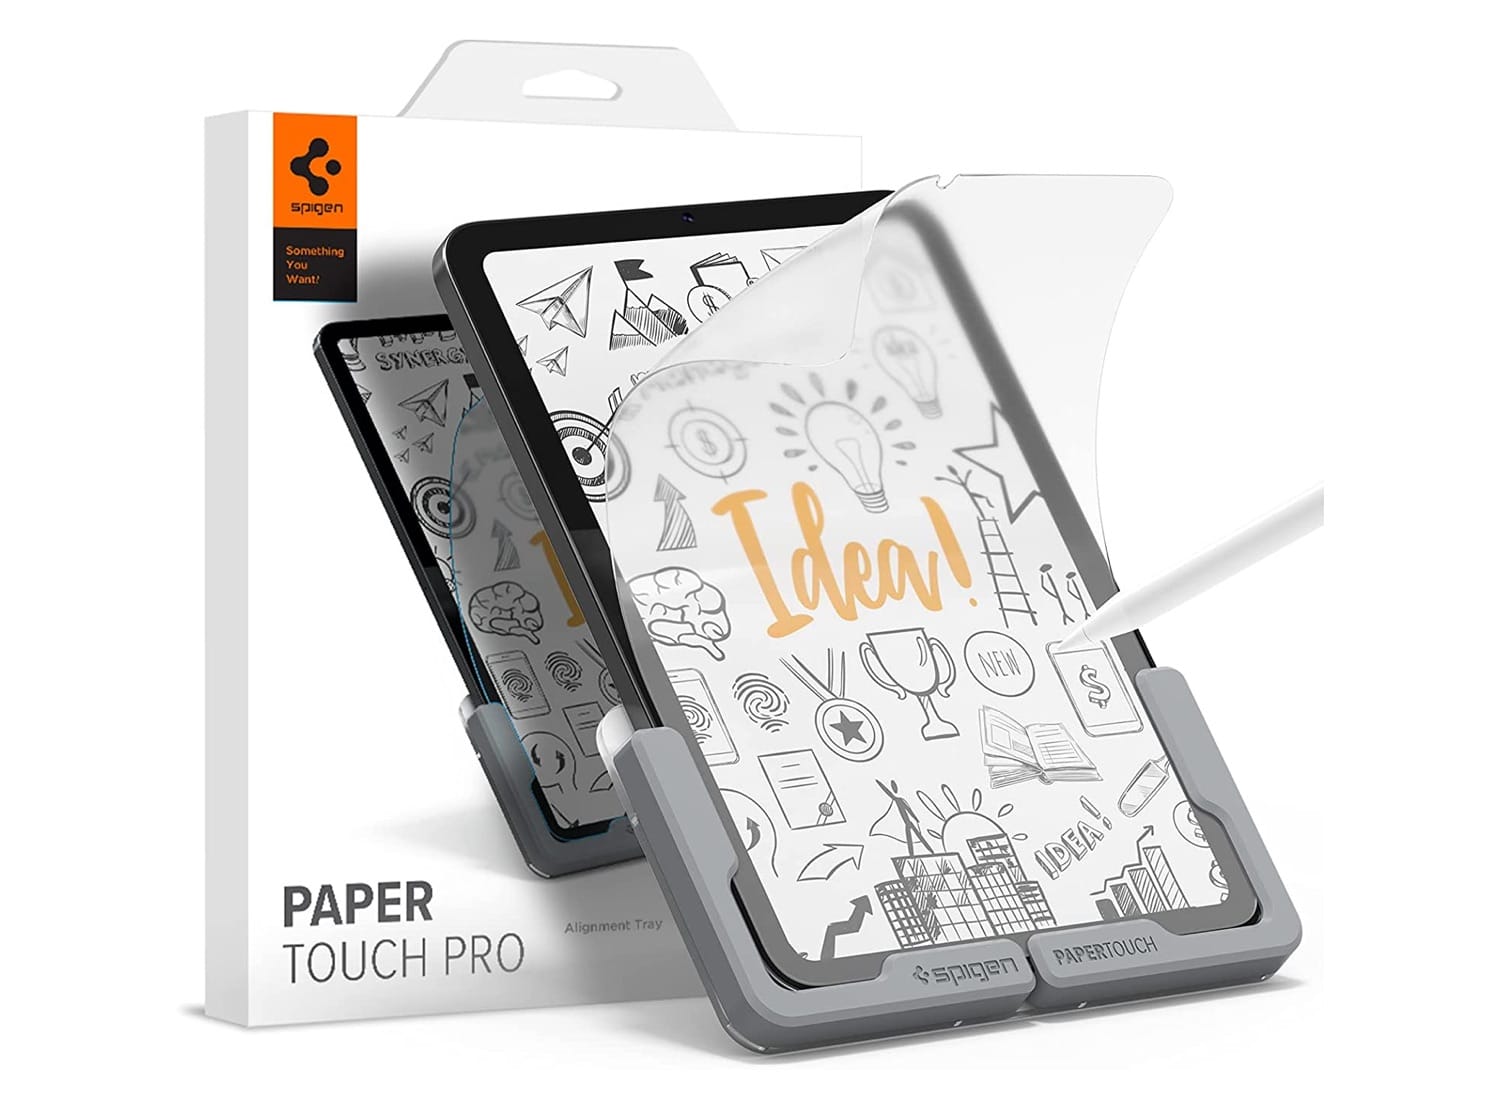 Spigen、紙のような描き心地のiPad mini用フィルム発売